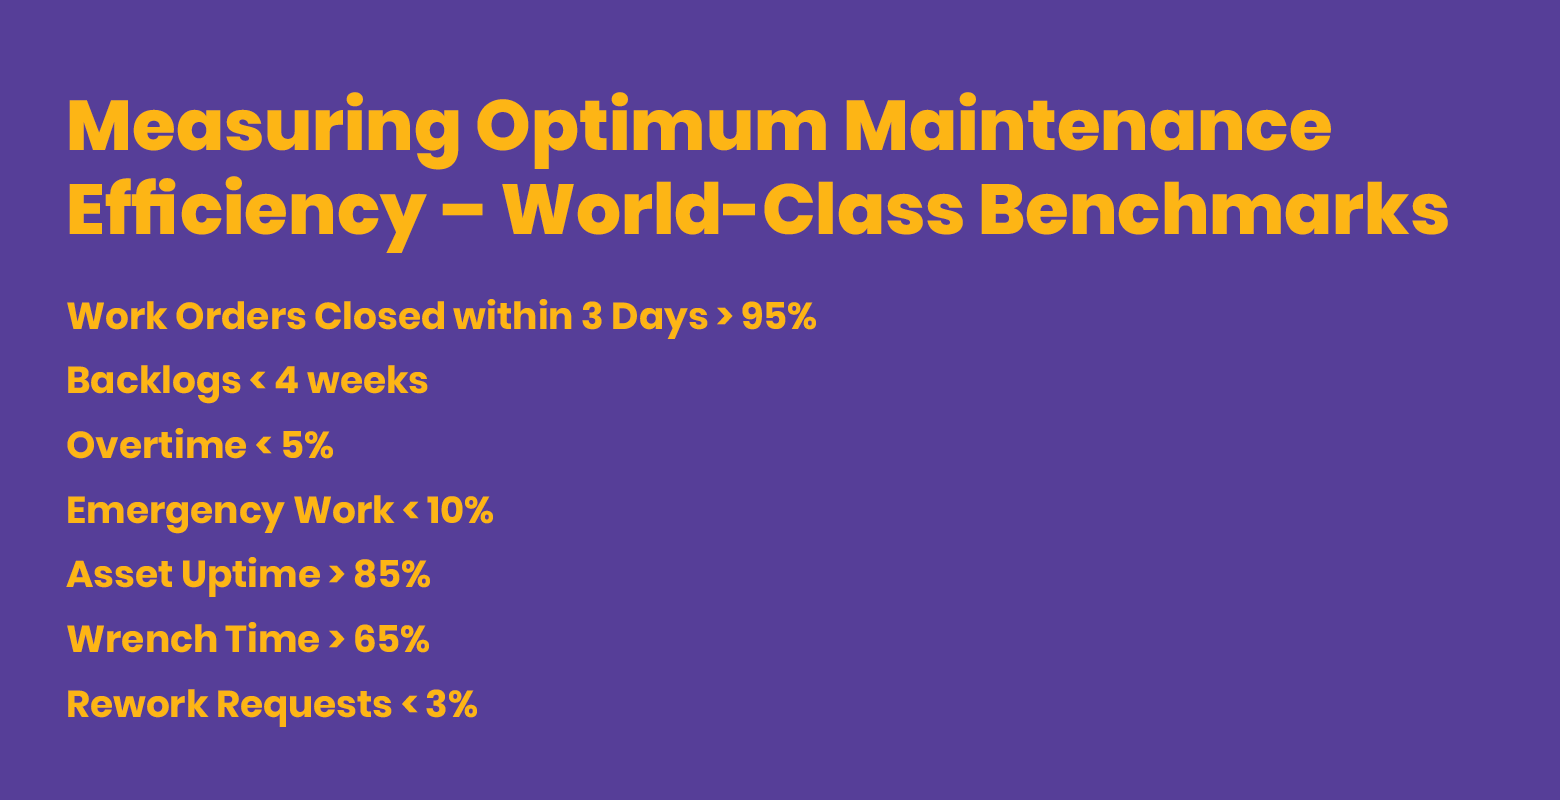 Measuring Optimum Maintenance Efficiency - World-Class Benchmarks